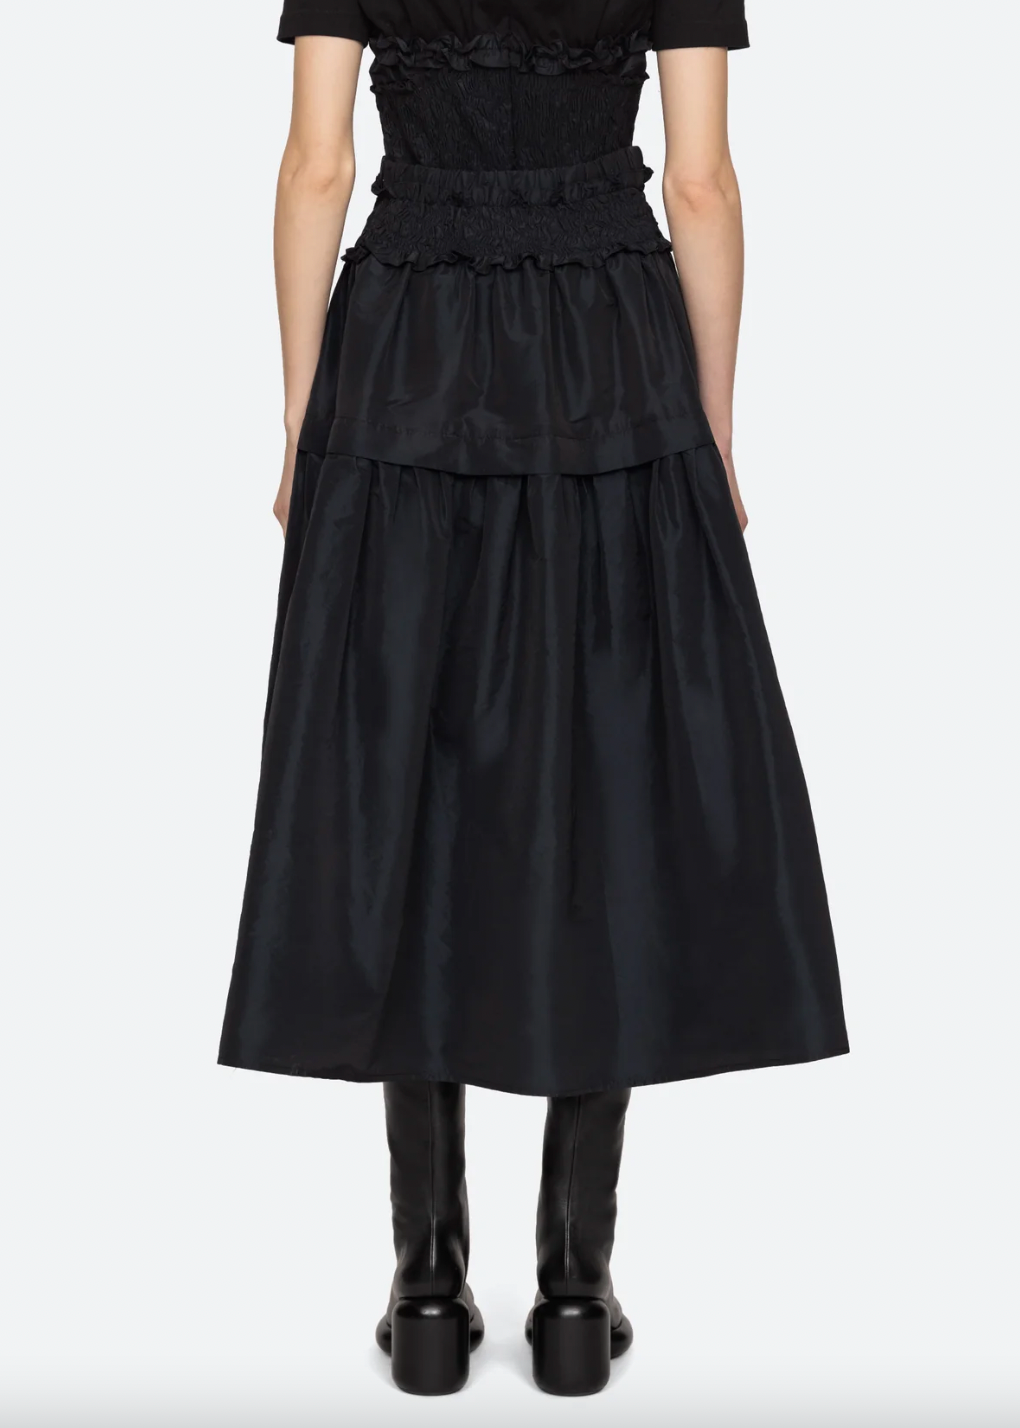 Product Image for Diana Taffeta Smocked Midi Skirt, Black